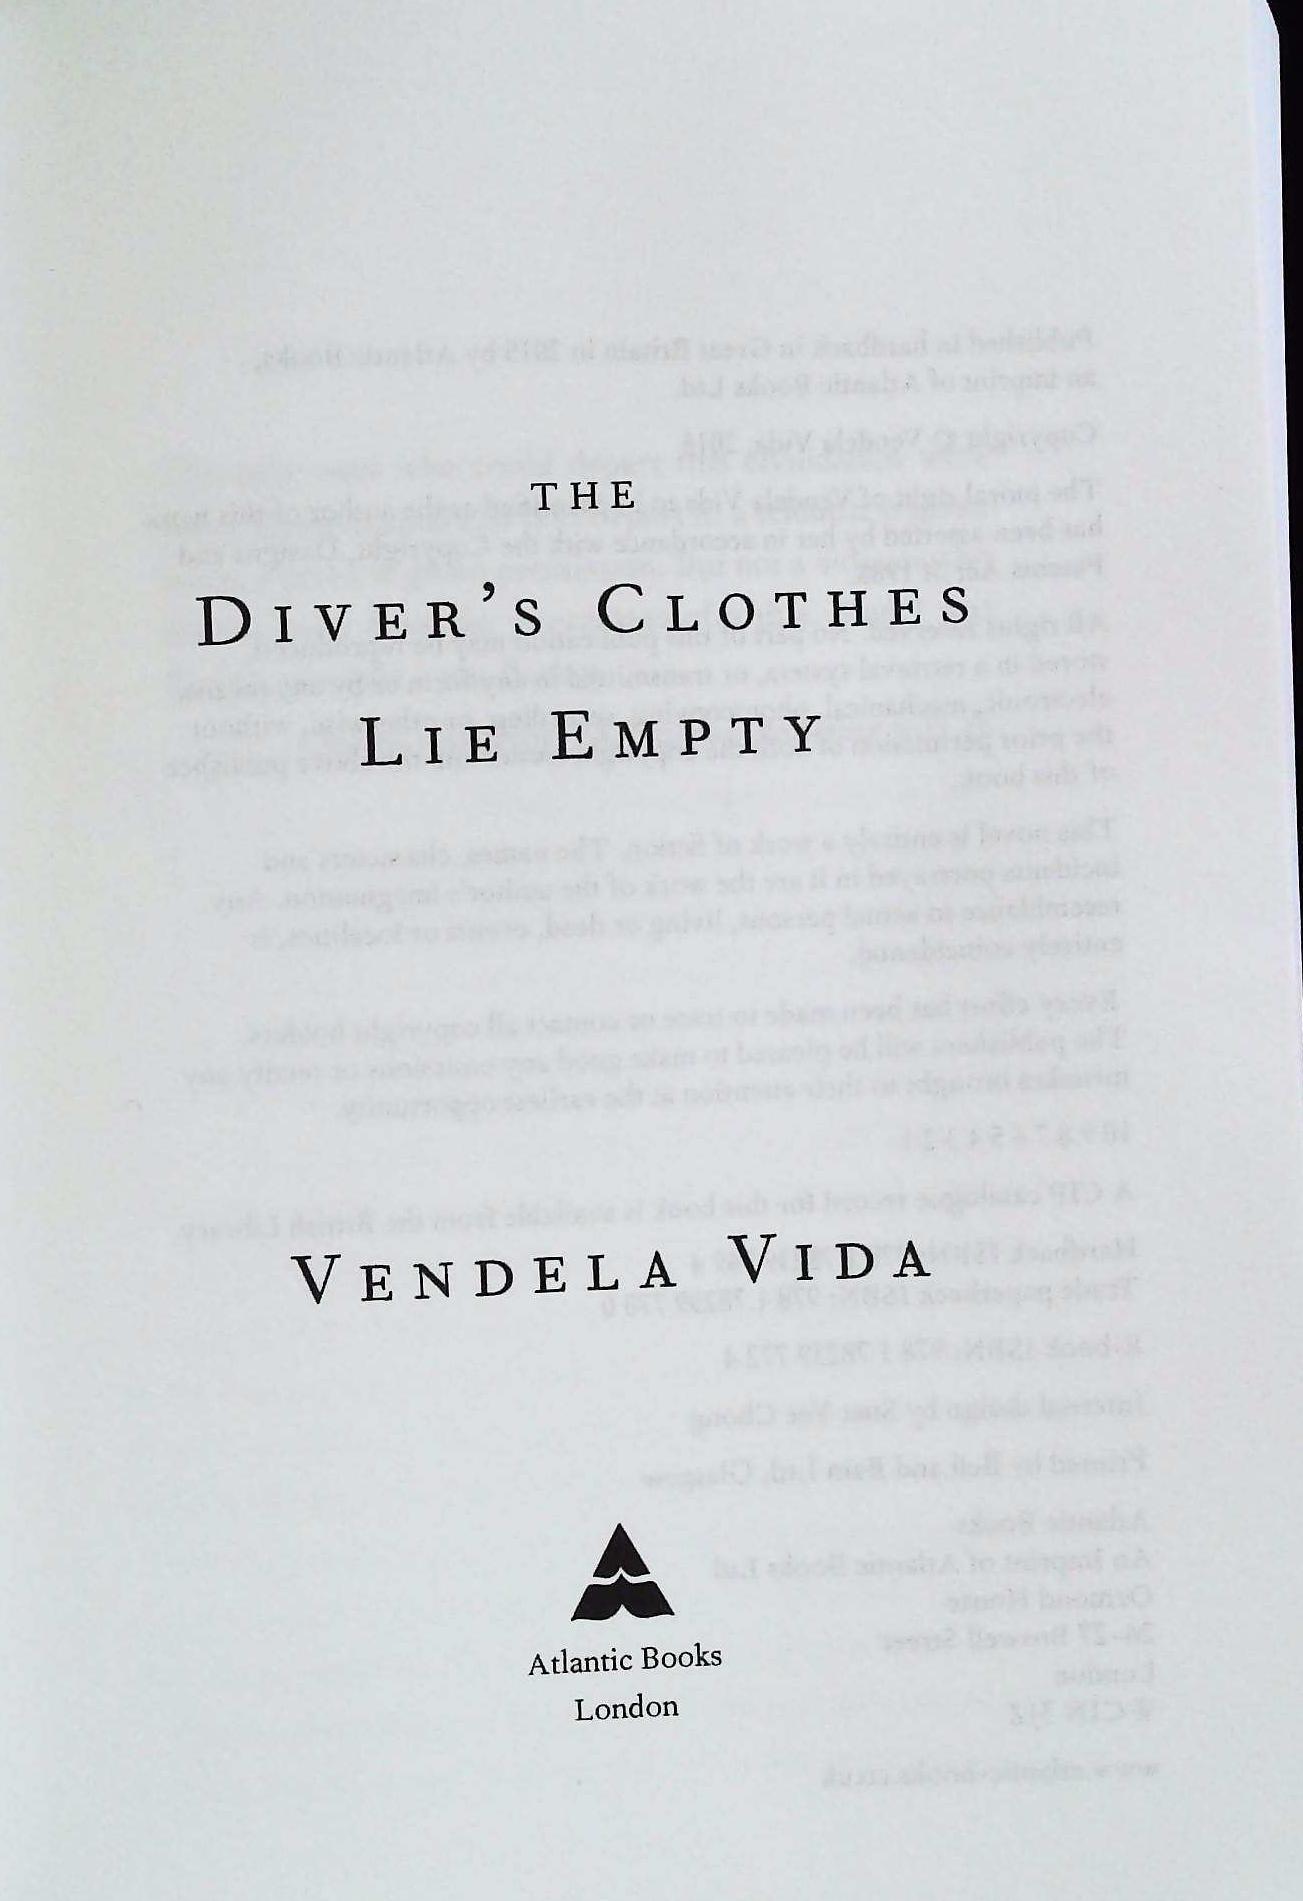 The Diver's Clothes Lie Empty paperback book by Vendela Vida. Published 2015 Atlantic Books ISBN - Image 3 of 4